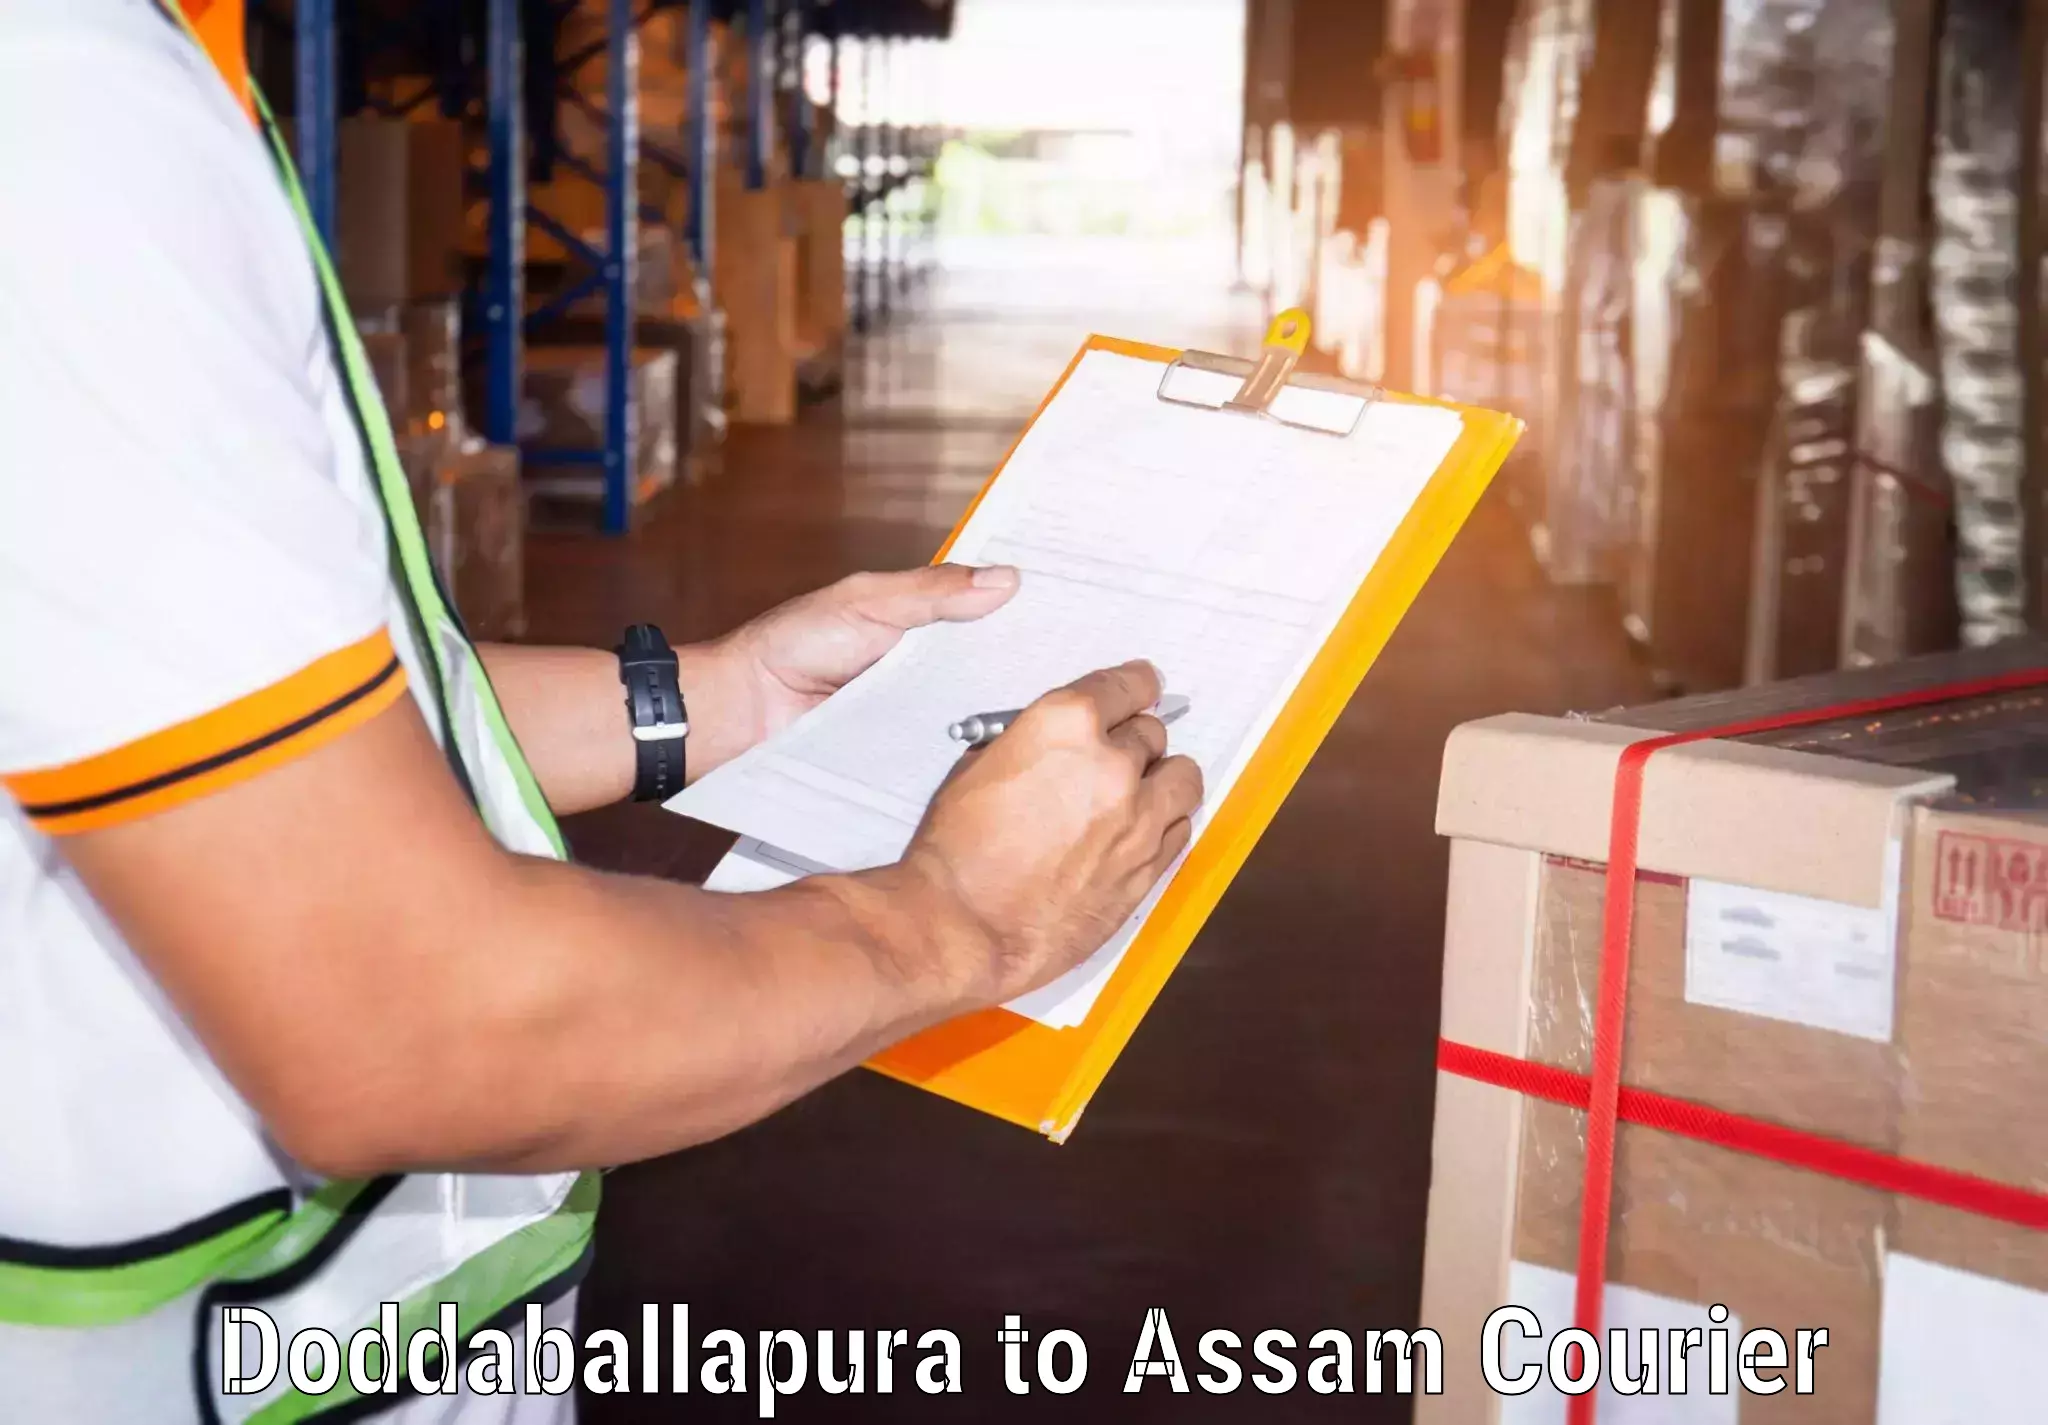 High-priority parcel service Doddaballapura to Lala Assam